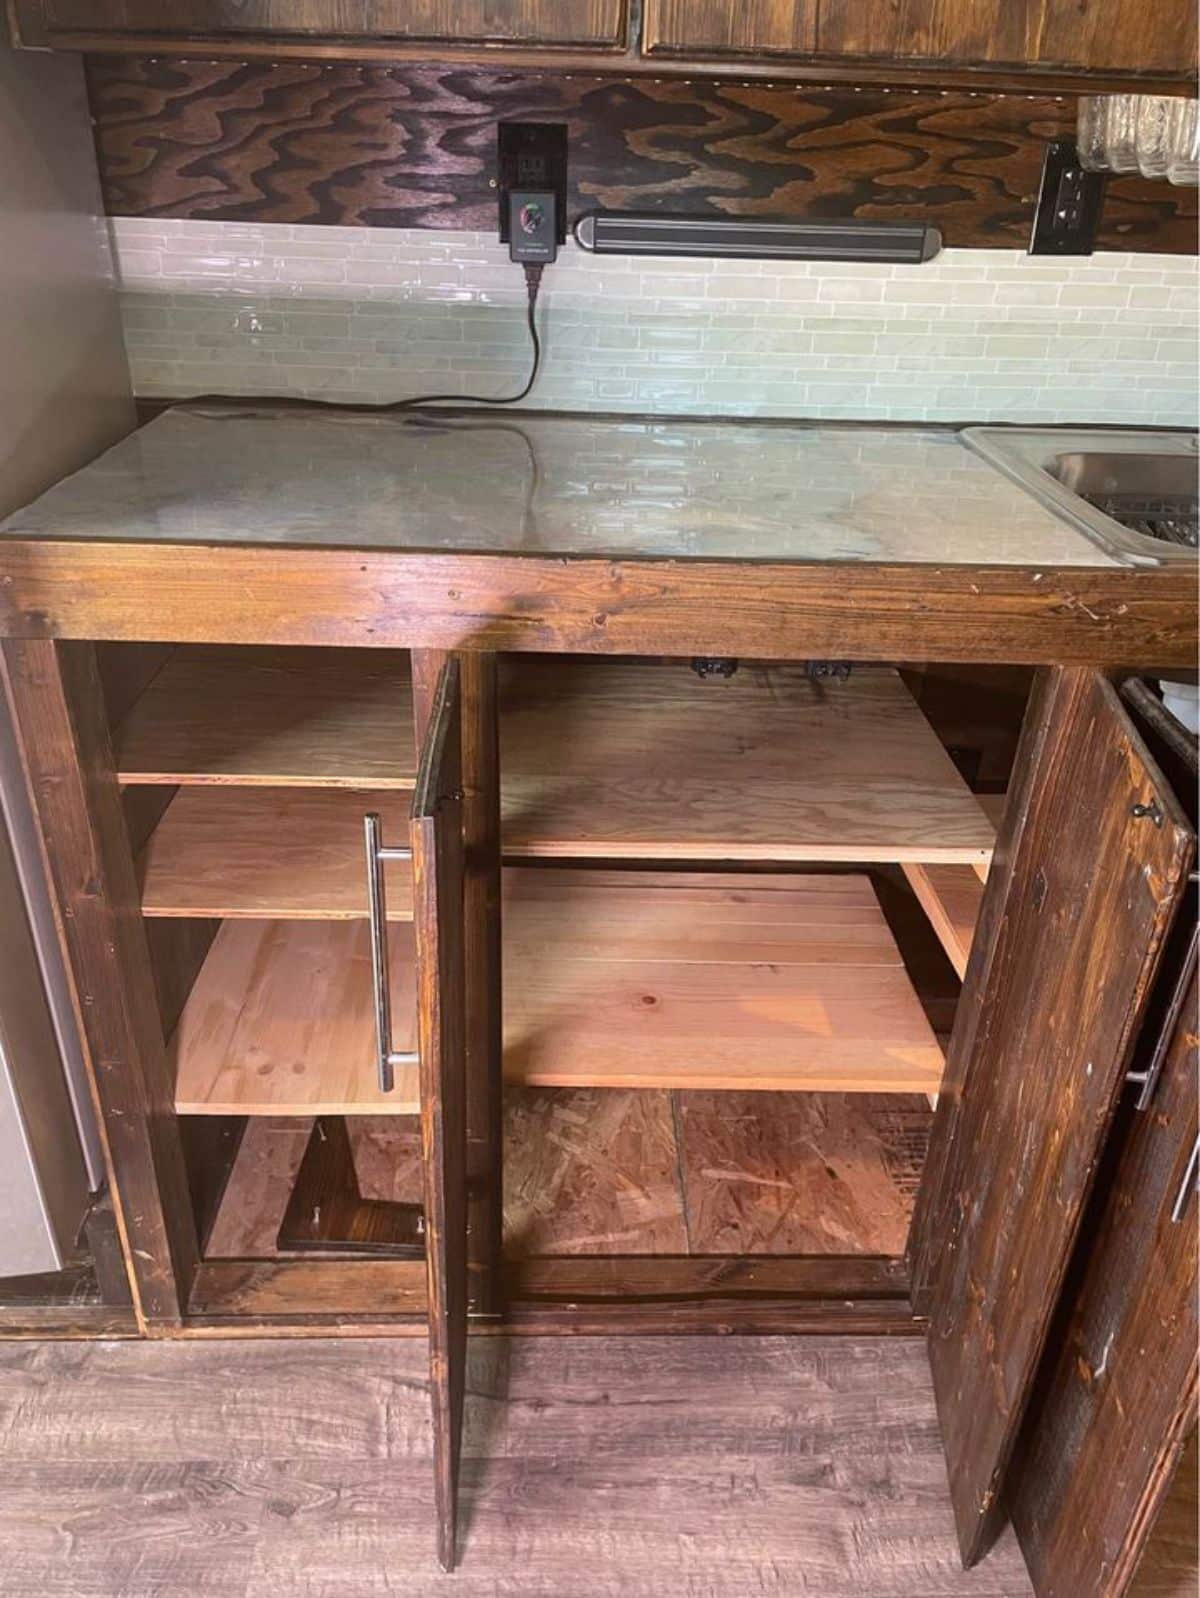 wooden storage cabinets in the kitchen